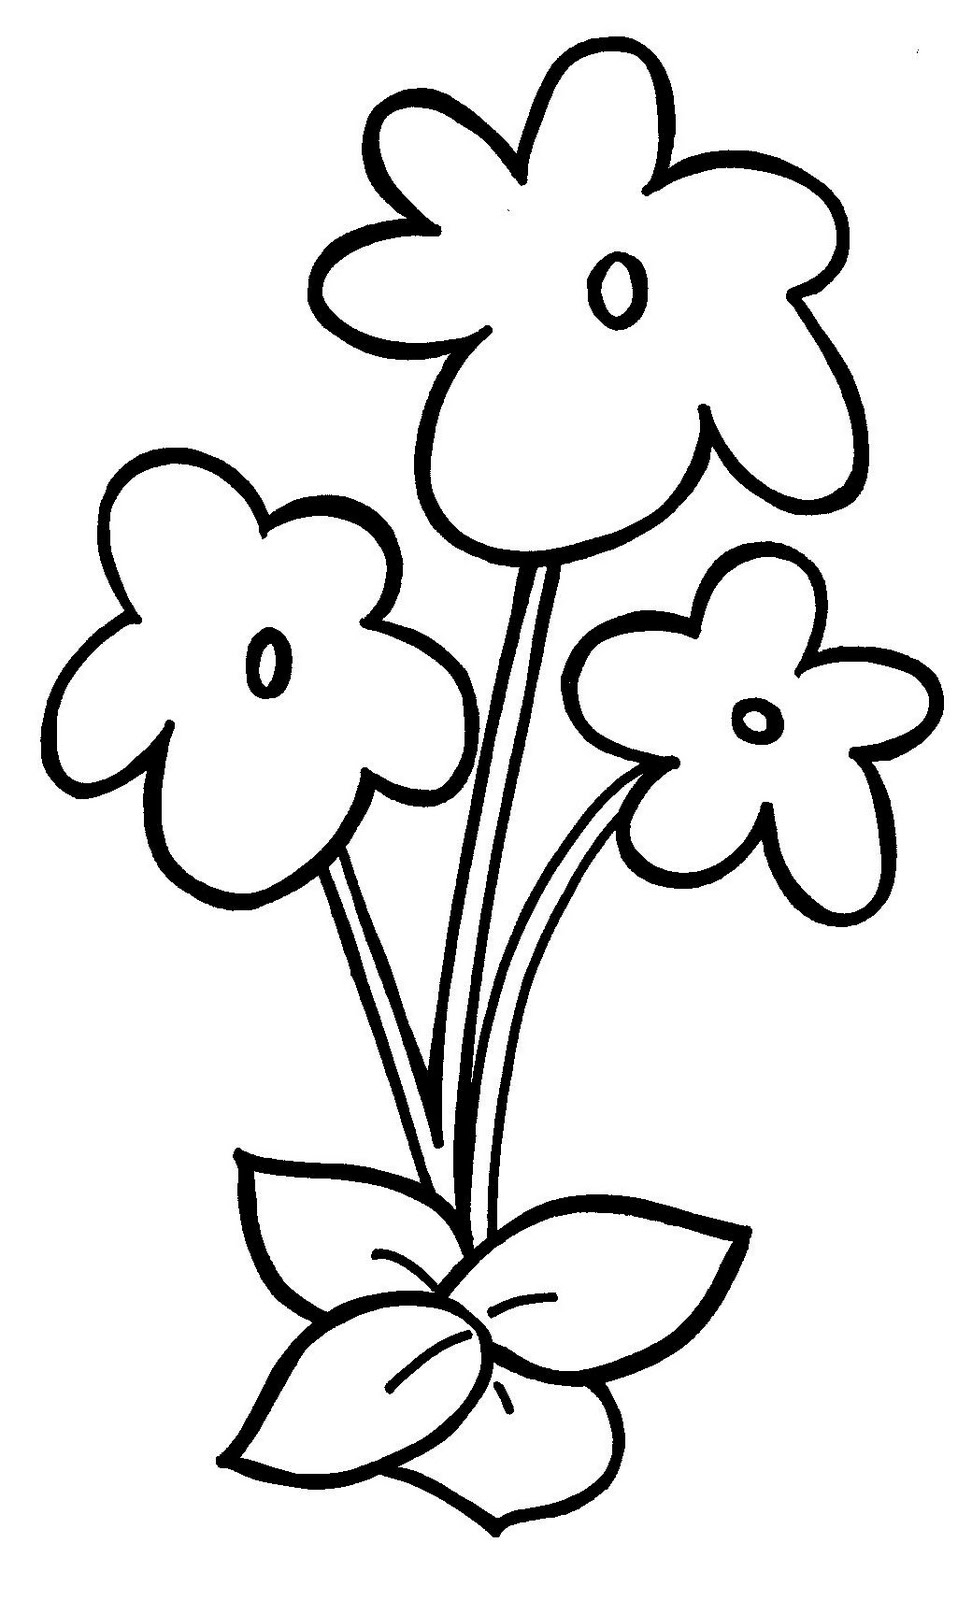 9 Best Images of Spring Flower Template Preschool - Spring Flower ...